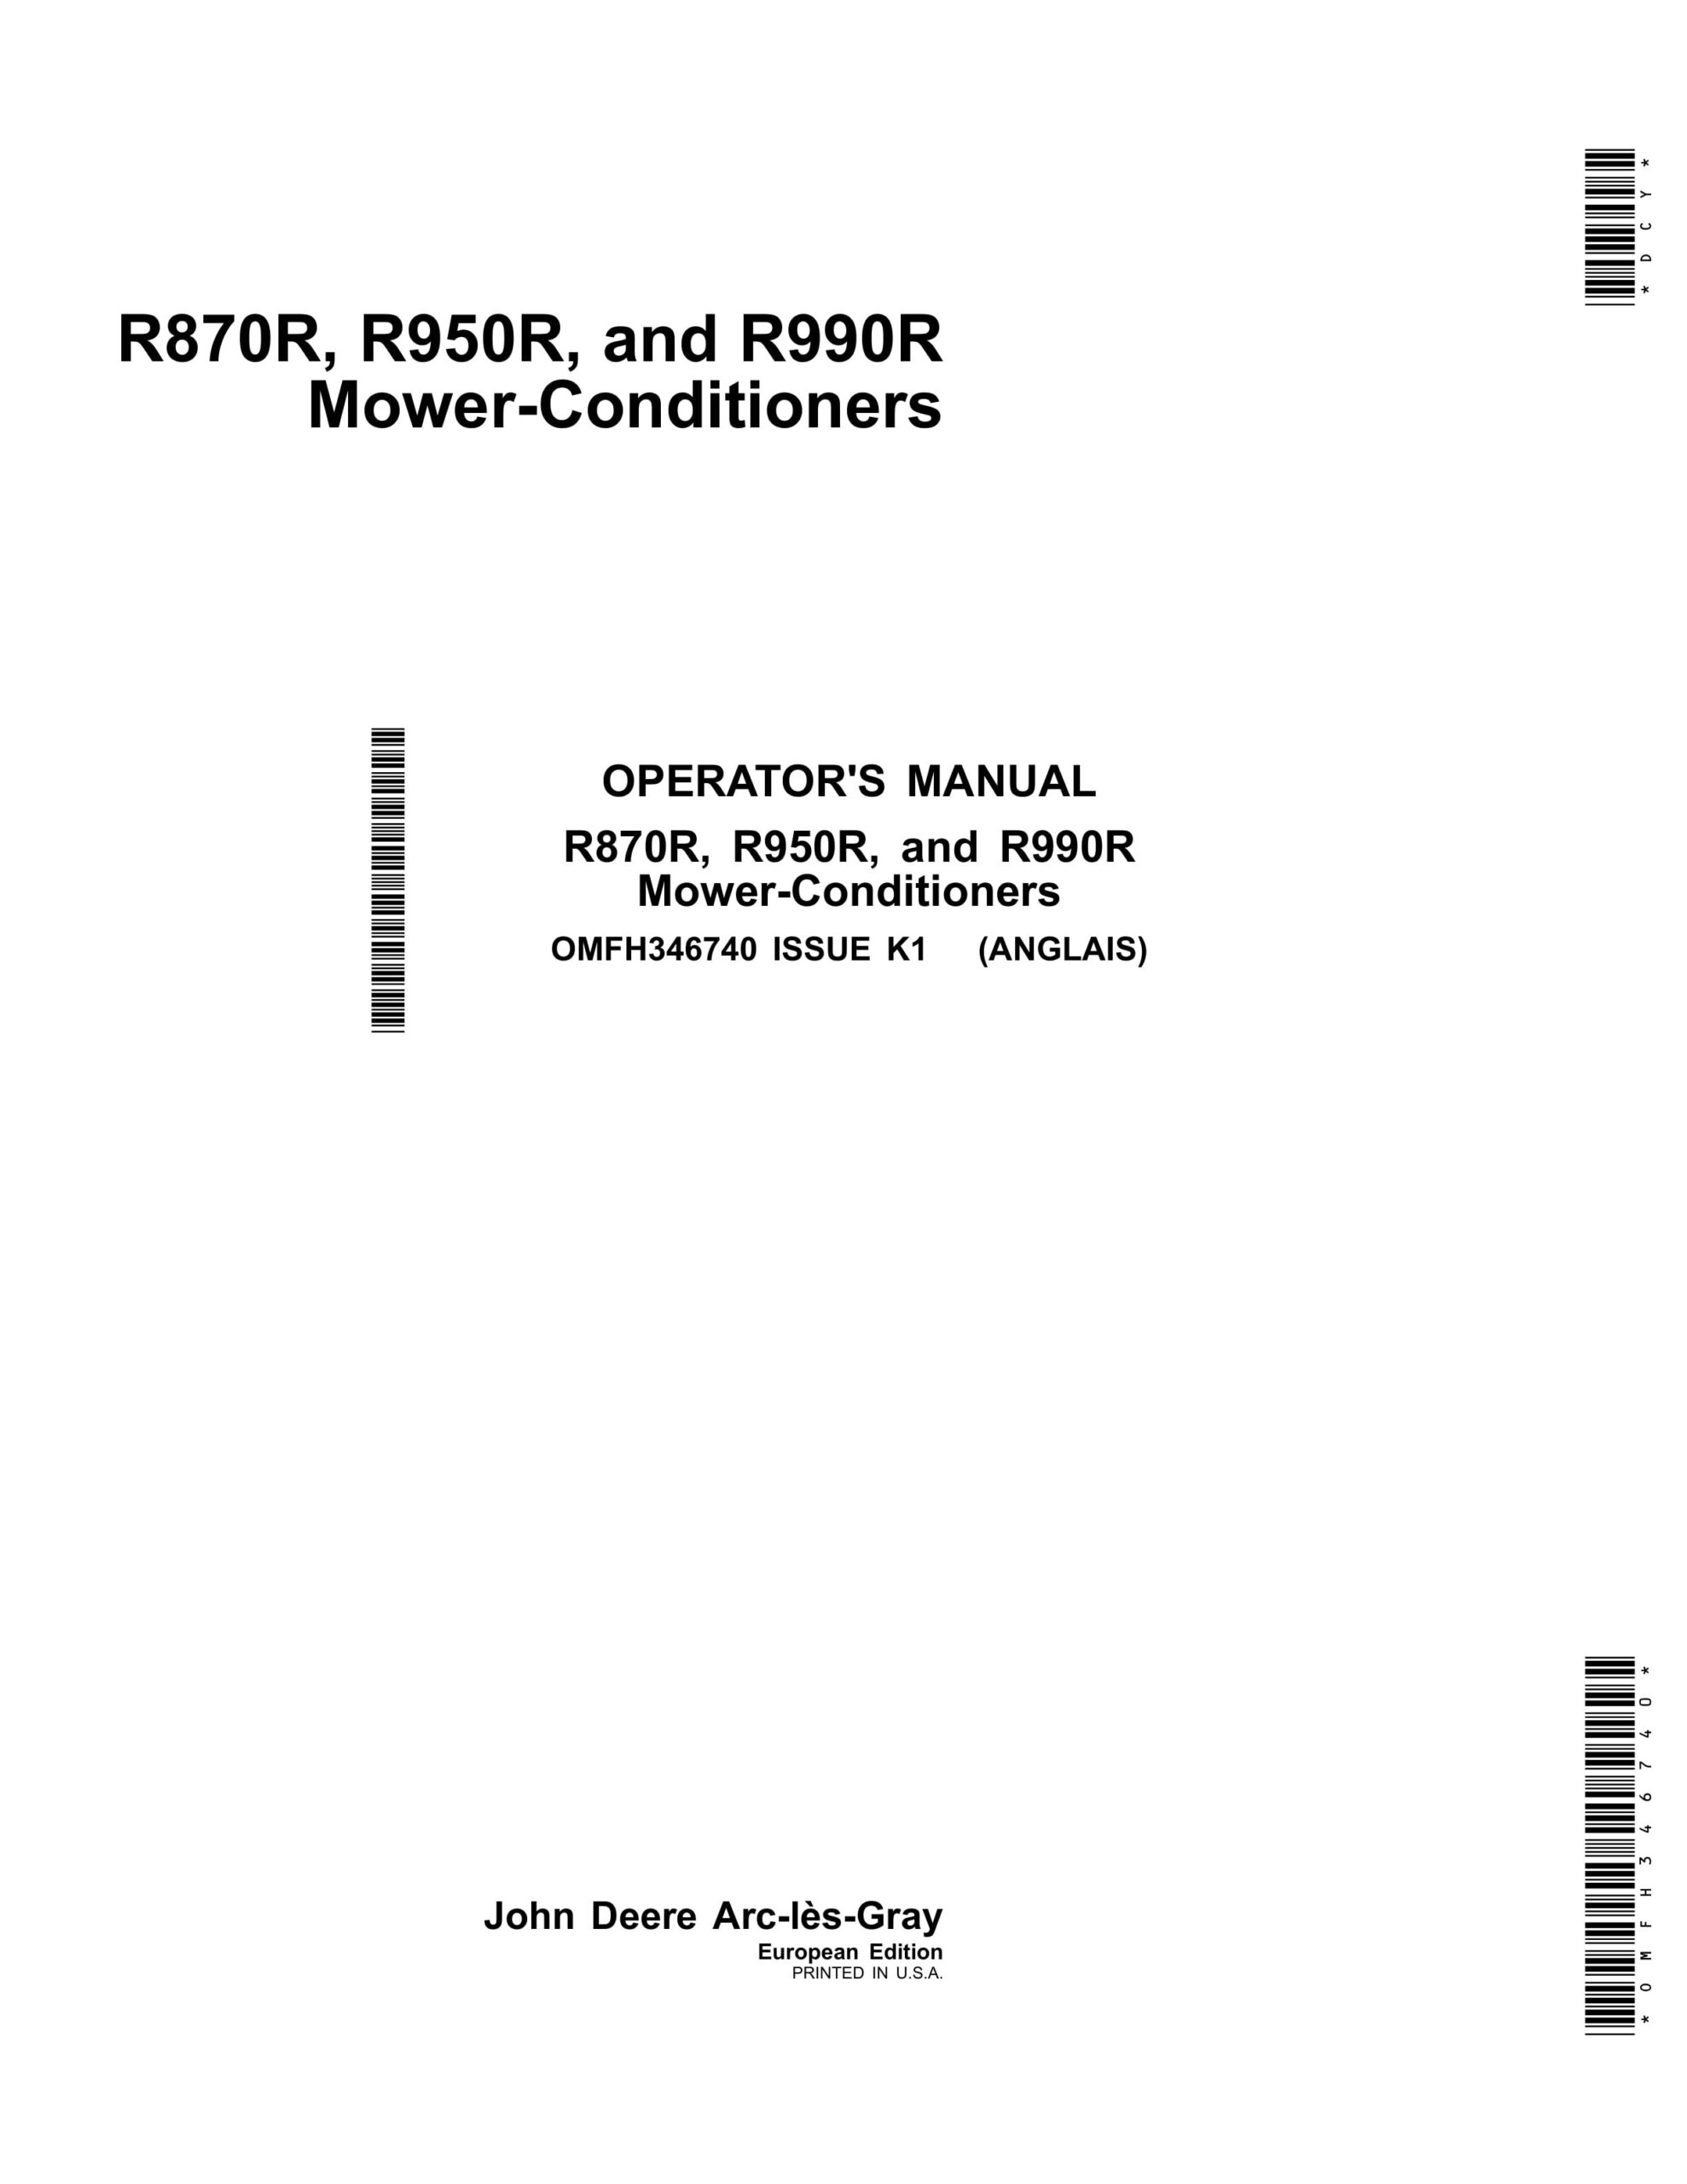 John Deere R870R, R950R, and R990R Mower-Conditioner Operator Manual OMFH346740-1